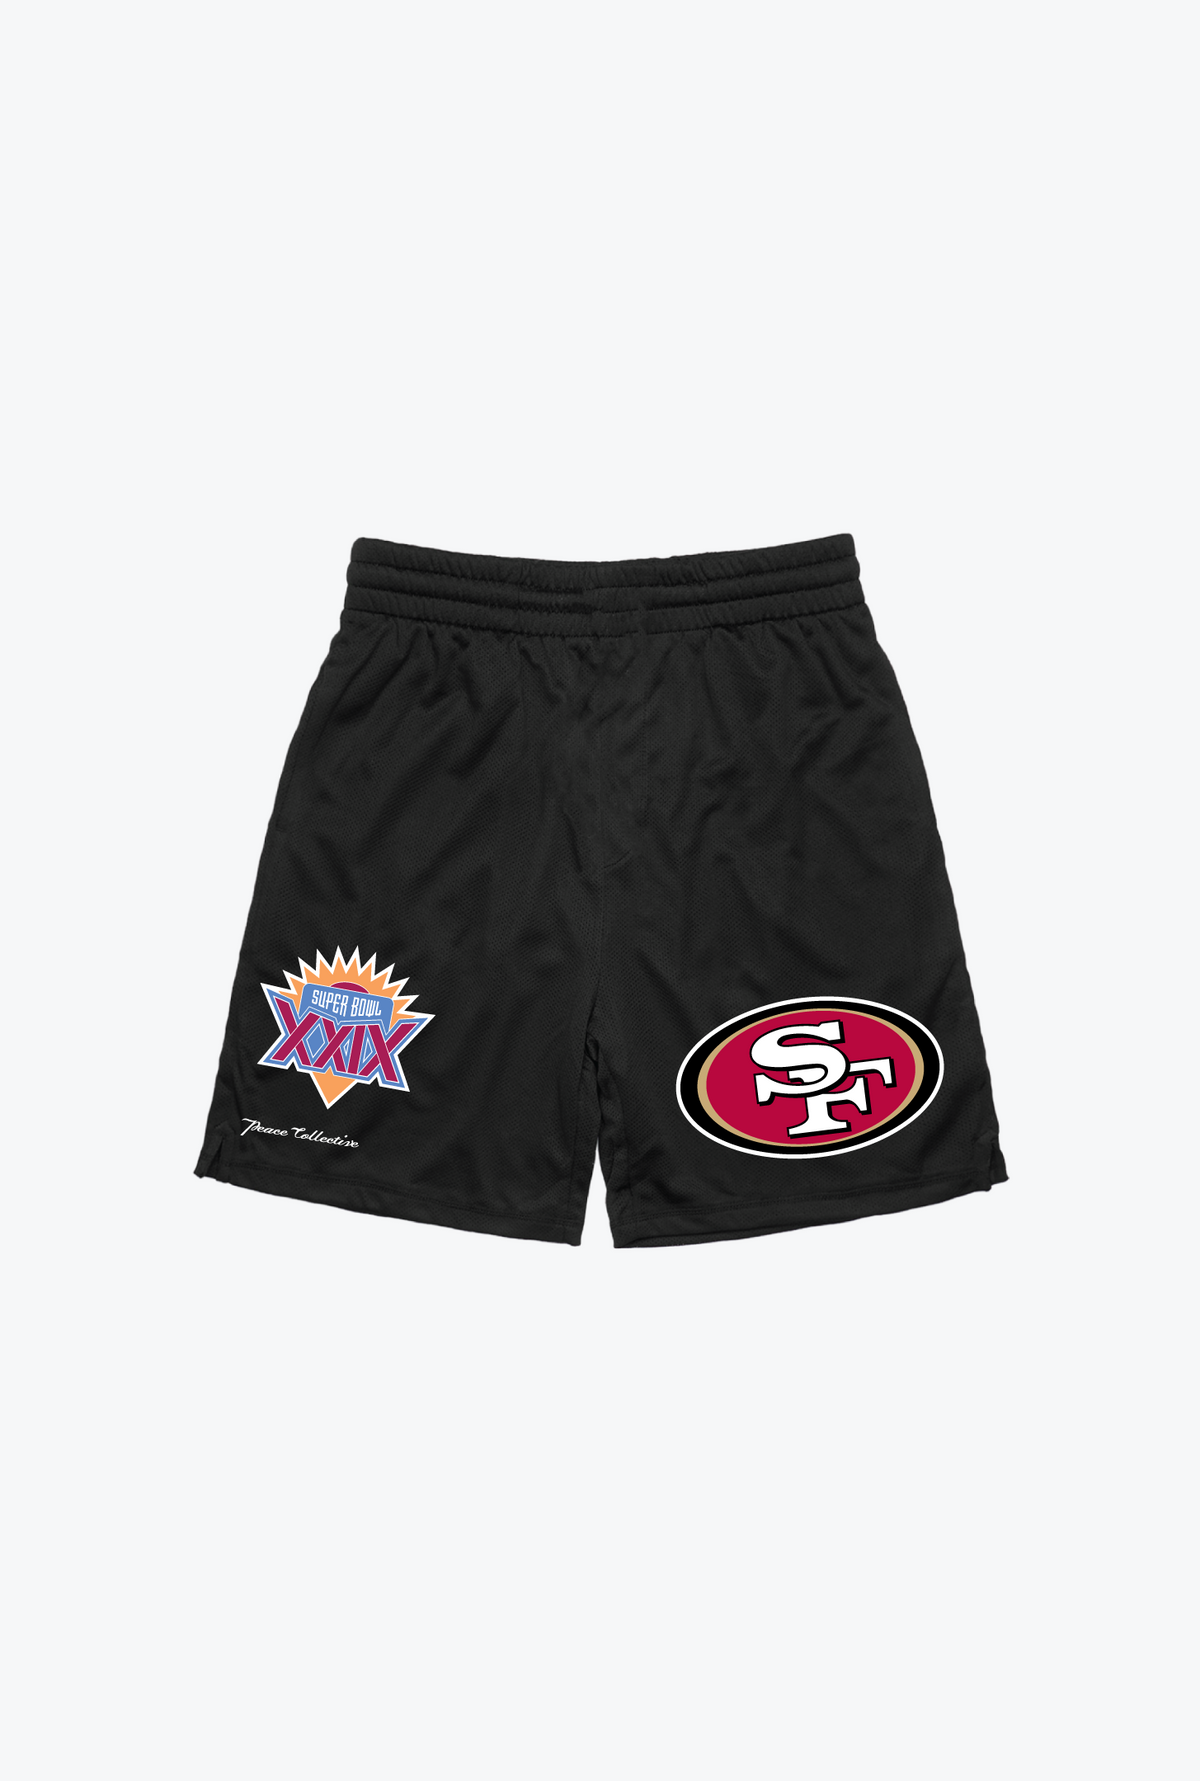 San Francisco 49ers Super Bowl XXIX Mesh Shorts - Black